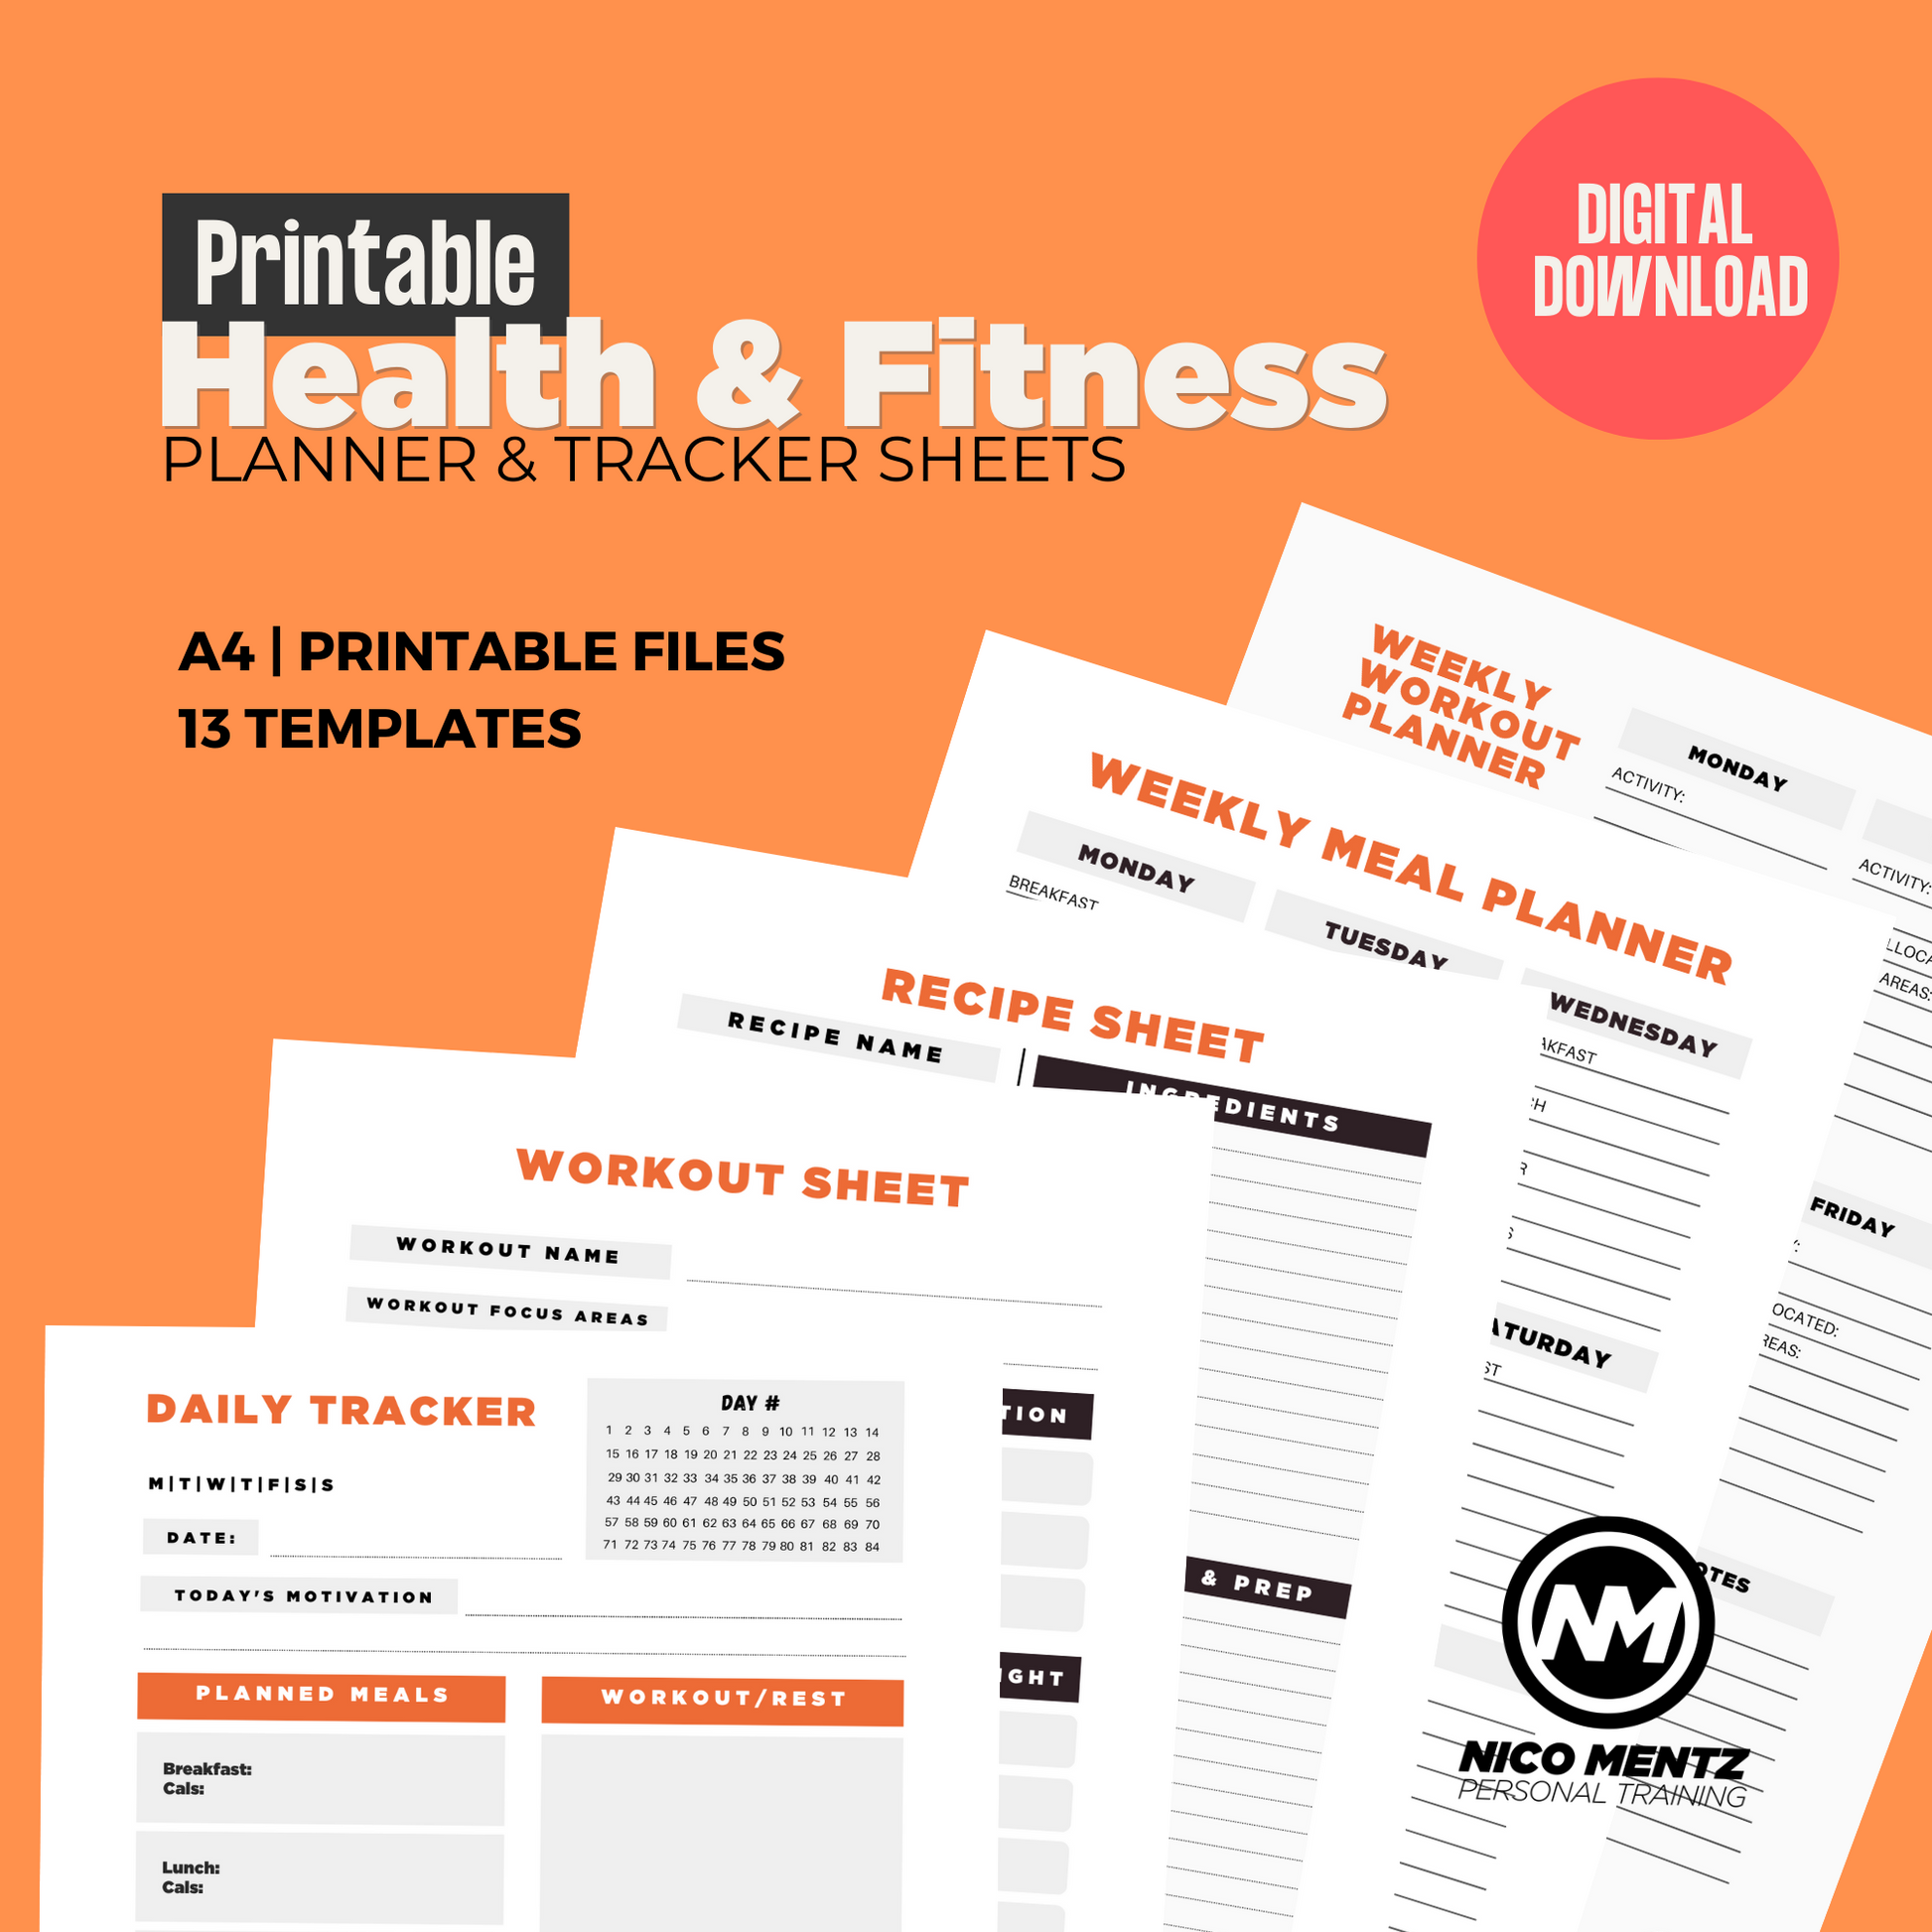 Printable Health & Fitness Planner & Tracker Sheets (Digital